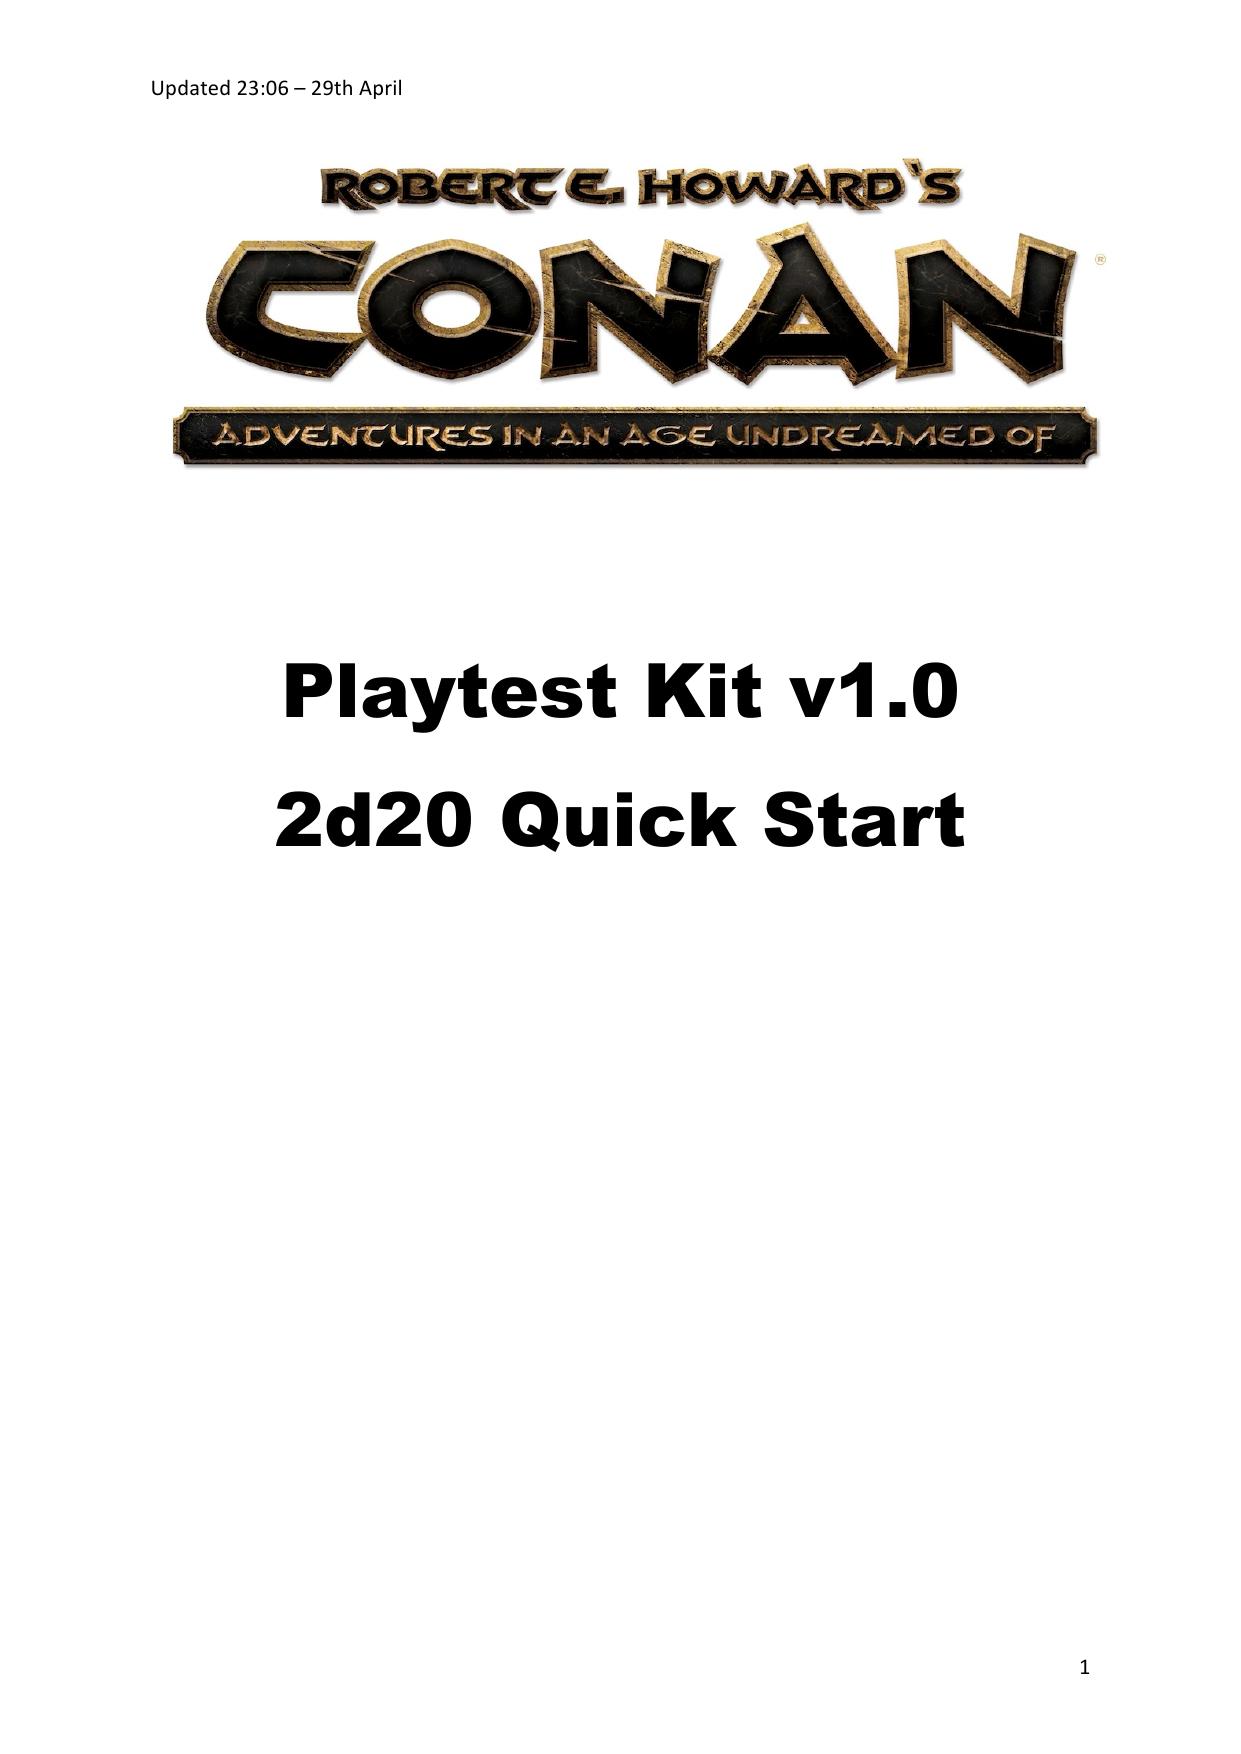 Microsoft Word - Conan Playtest Rules v1-0.docx